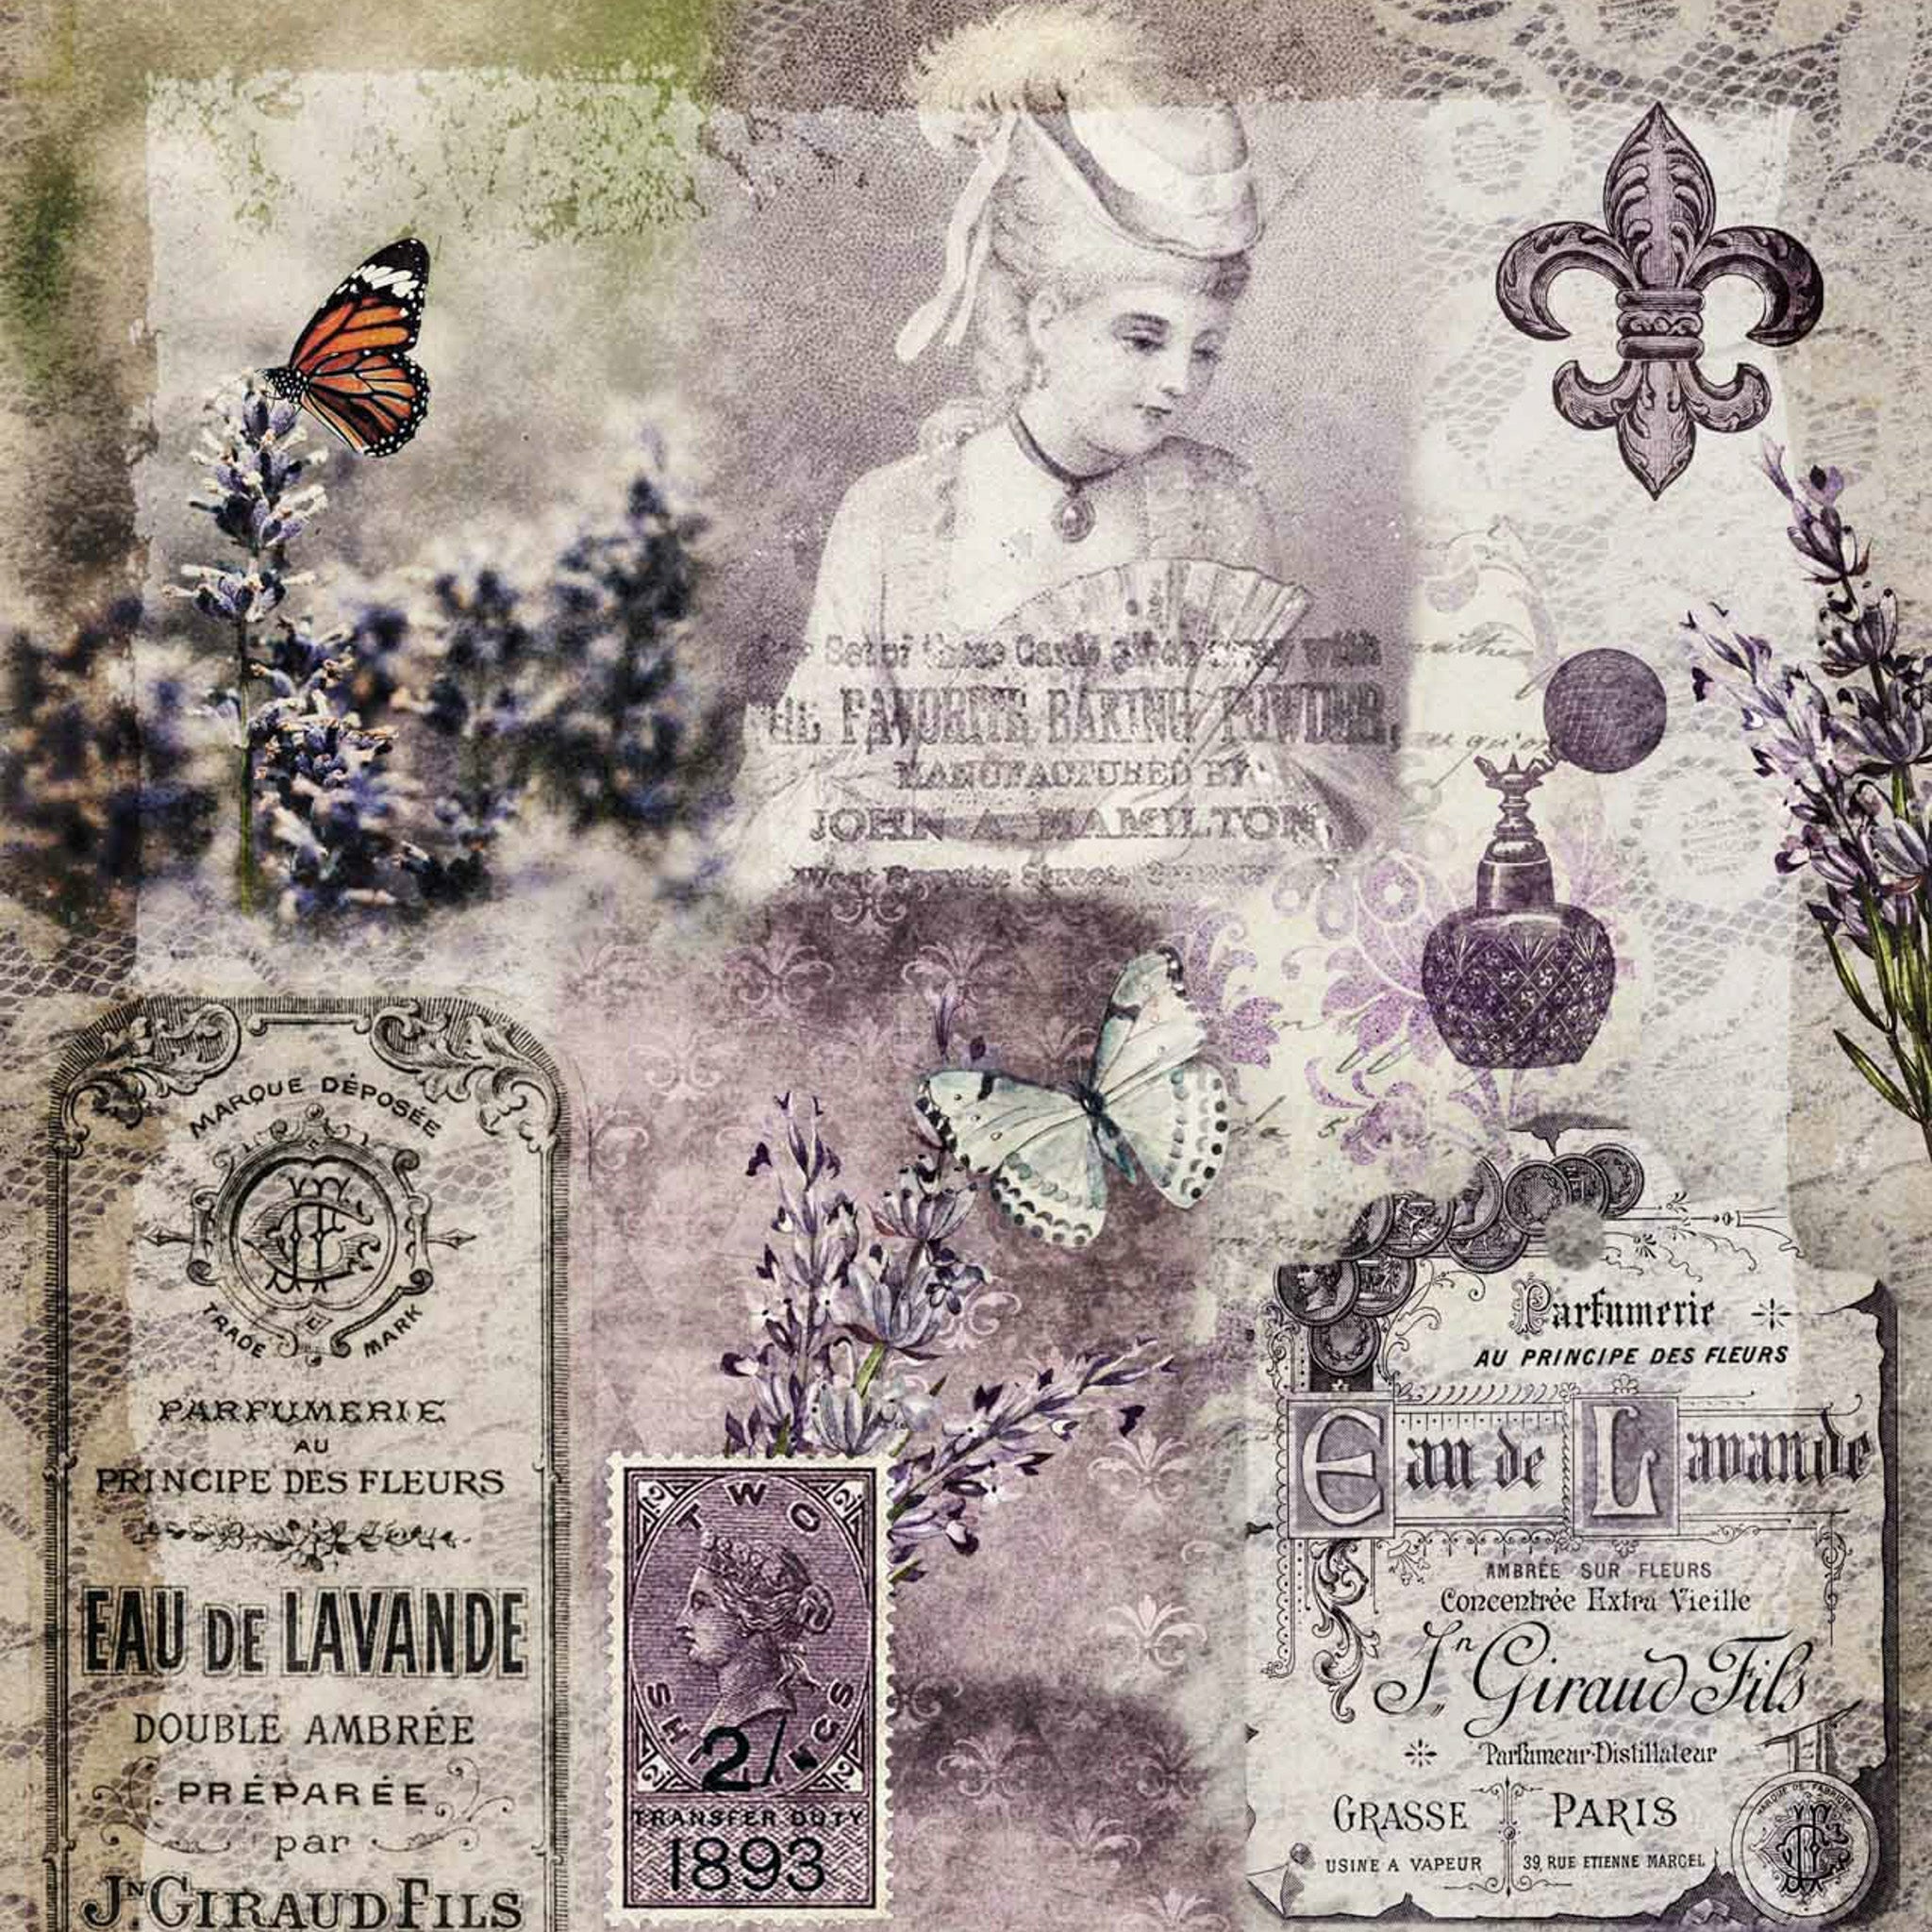 A3 rice paper design that features a collage of vintage lavender perfume labels and plants, fleur de lis, vintage stamps, and butterflies.